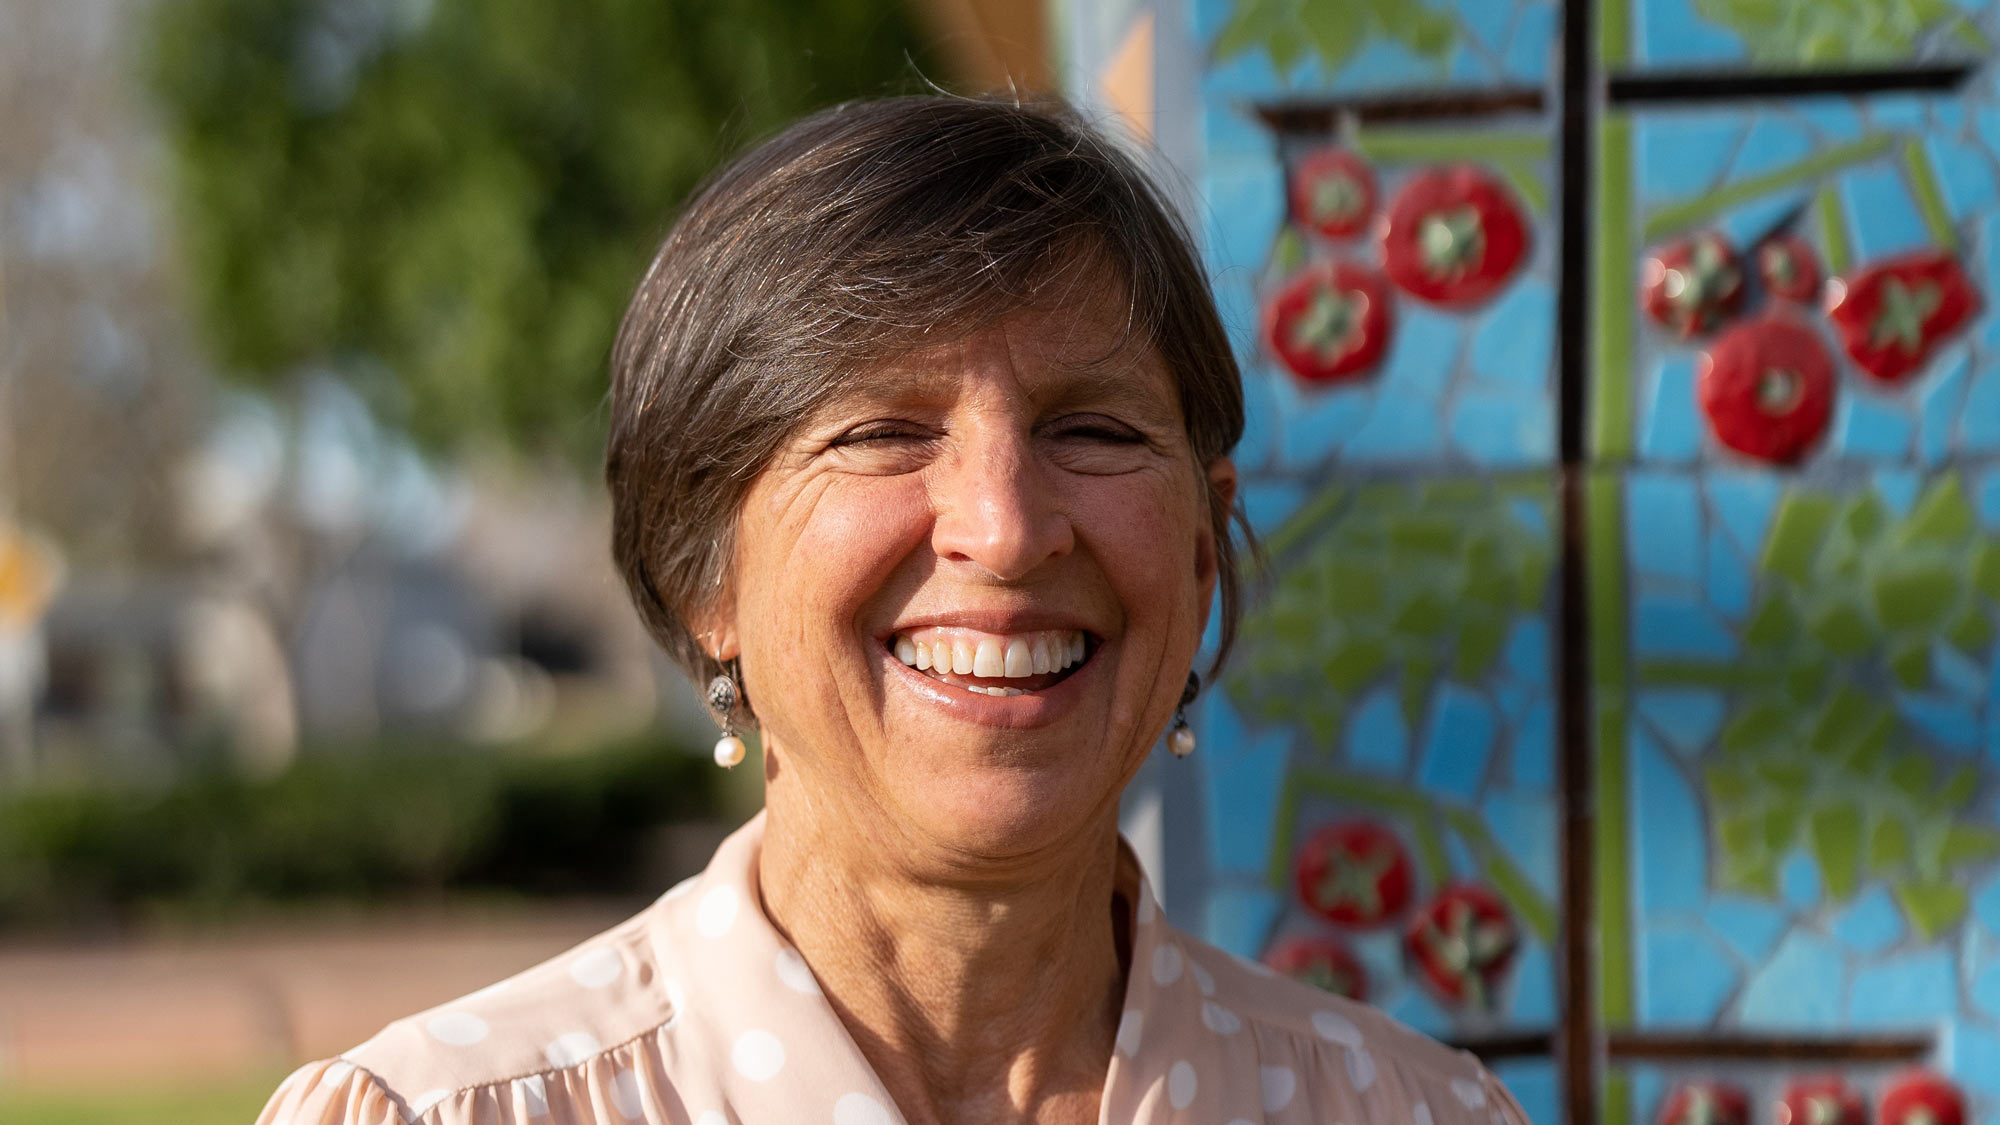 Pam Ronald, environmental, posing in front of vegetable-art mosaic column